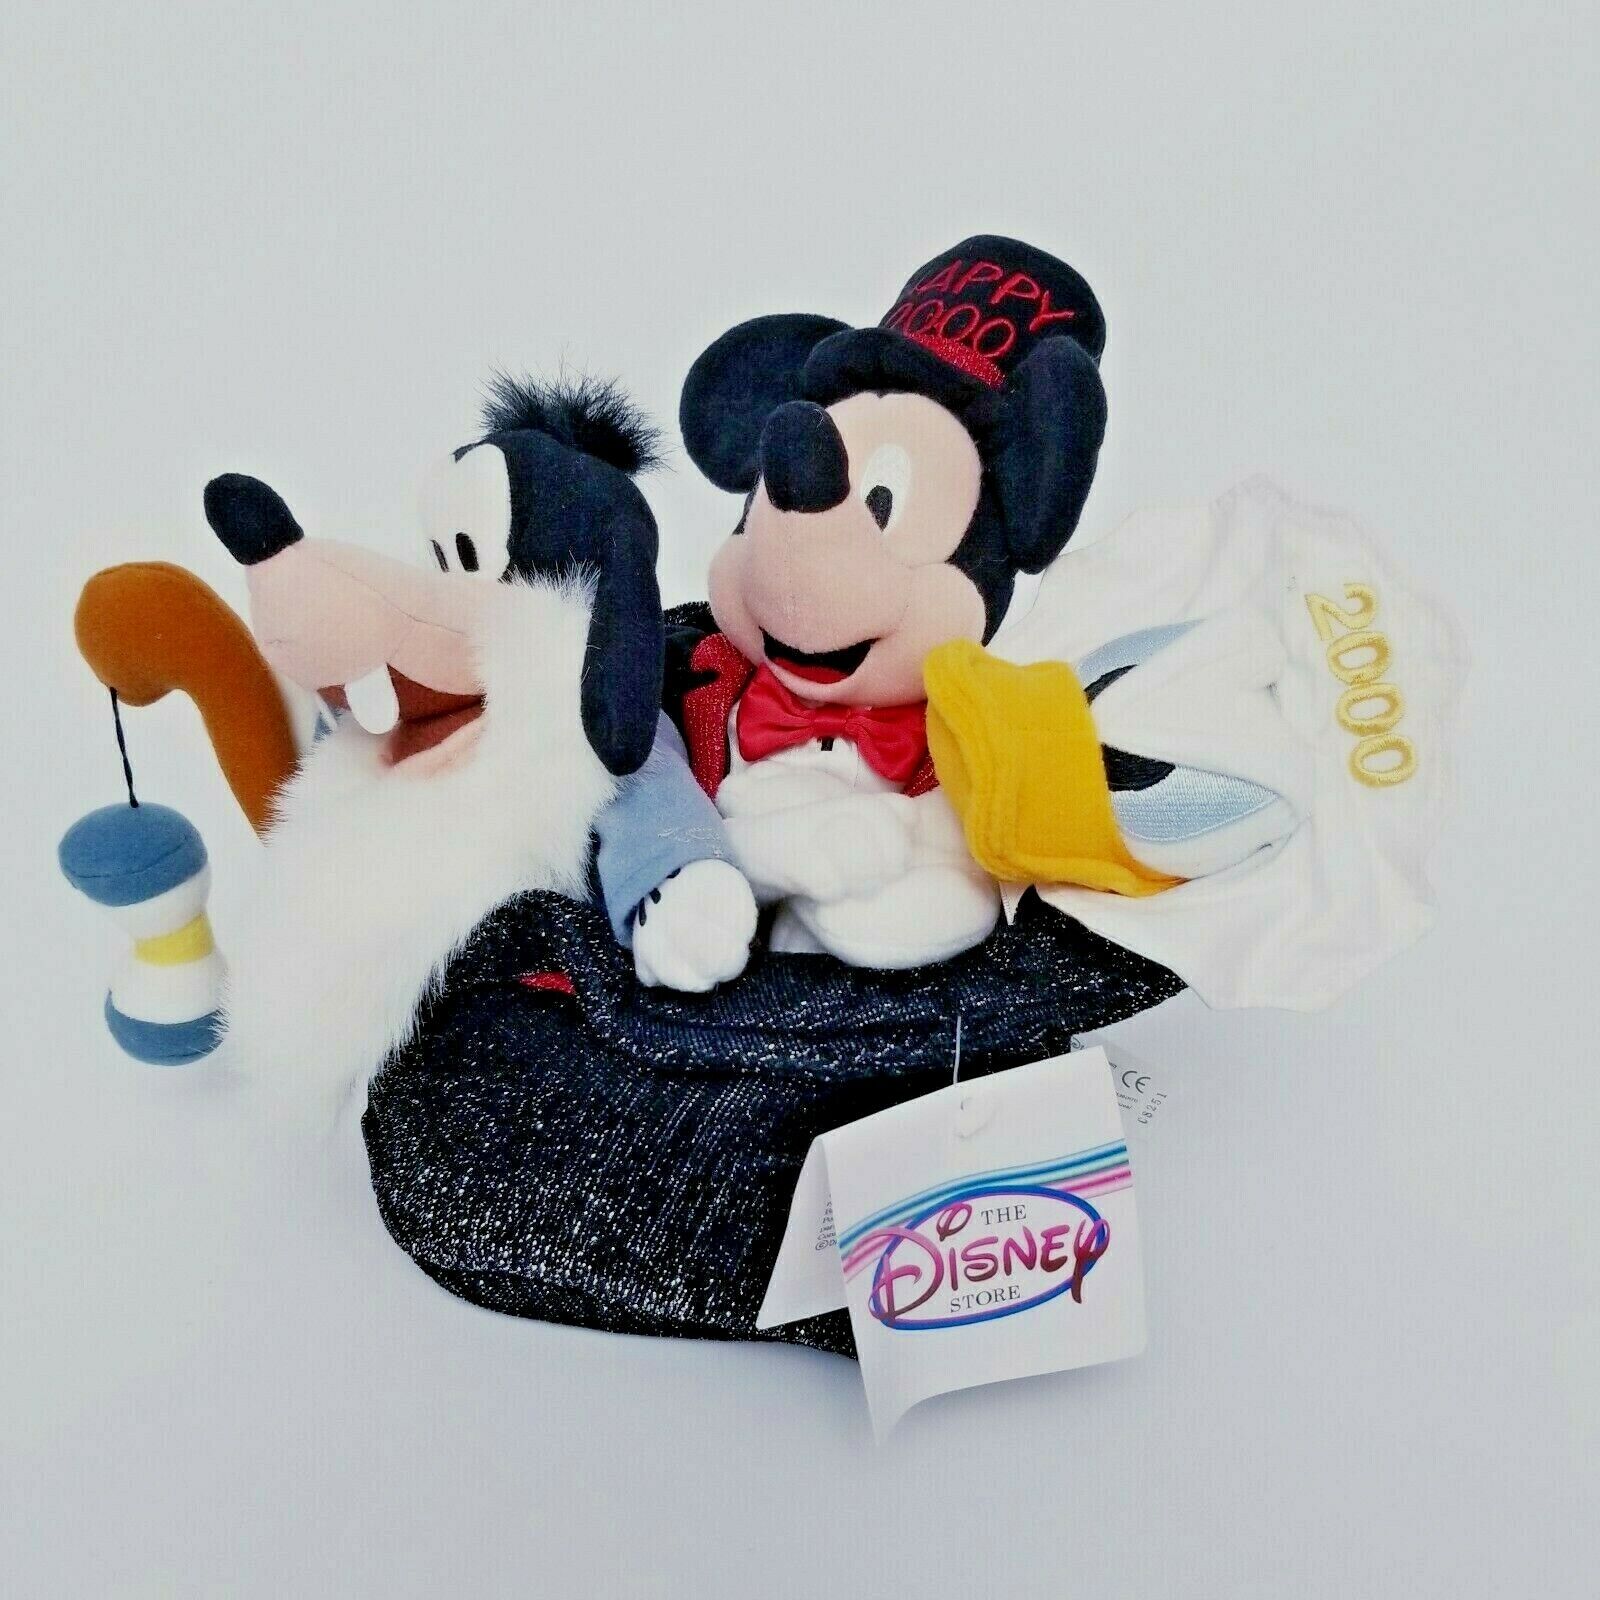 Disney Store New Year 2000 Bean Bag Plush Set 8" Donald Goofy Mickey Hat NWT Disney